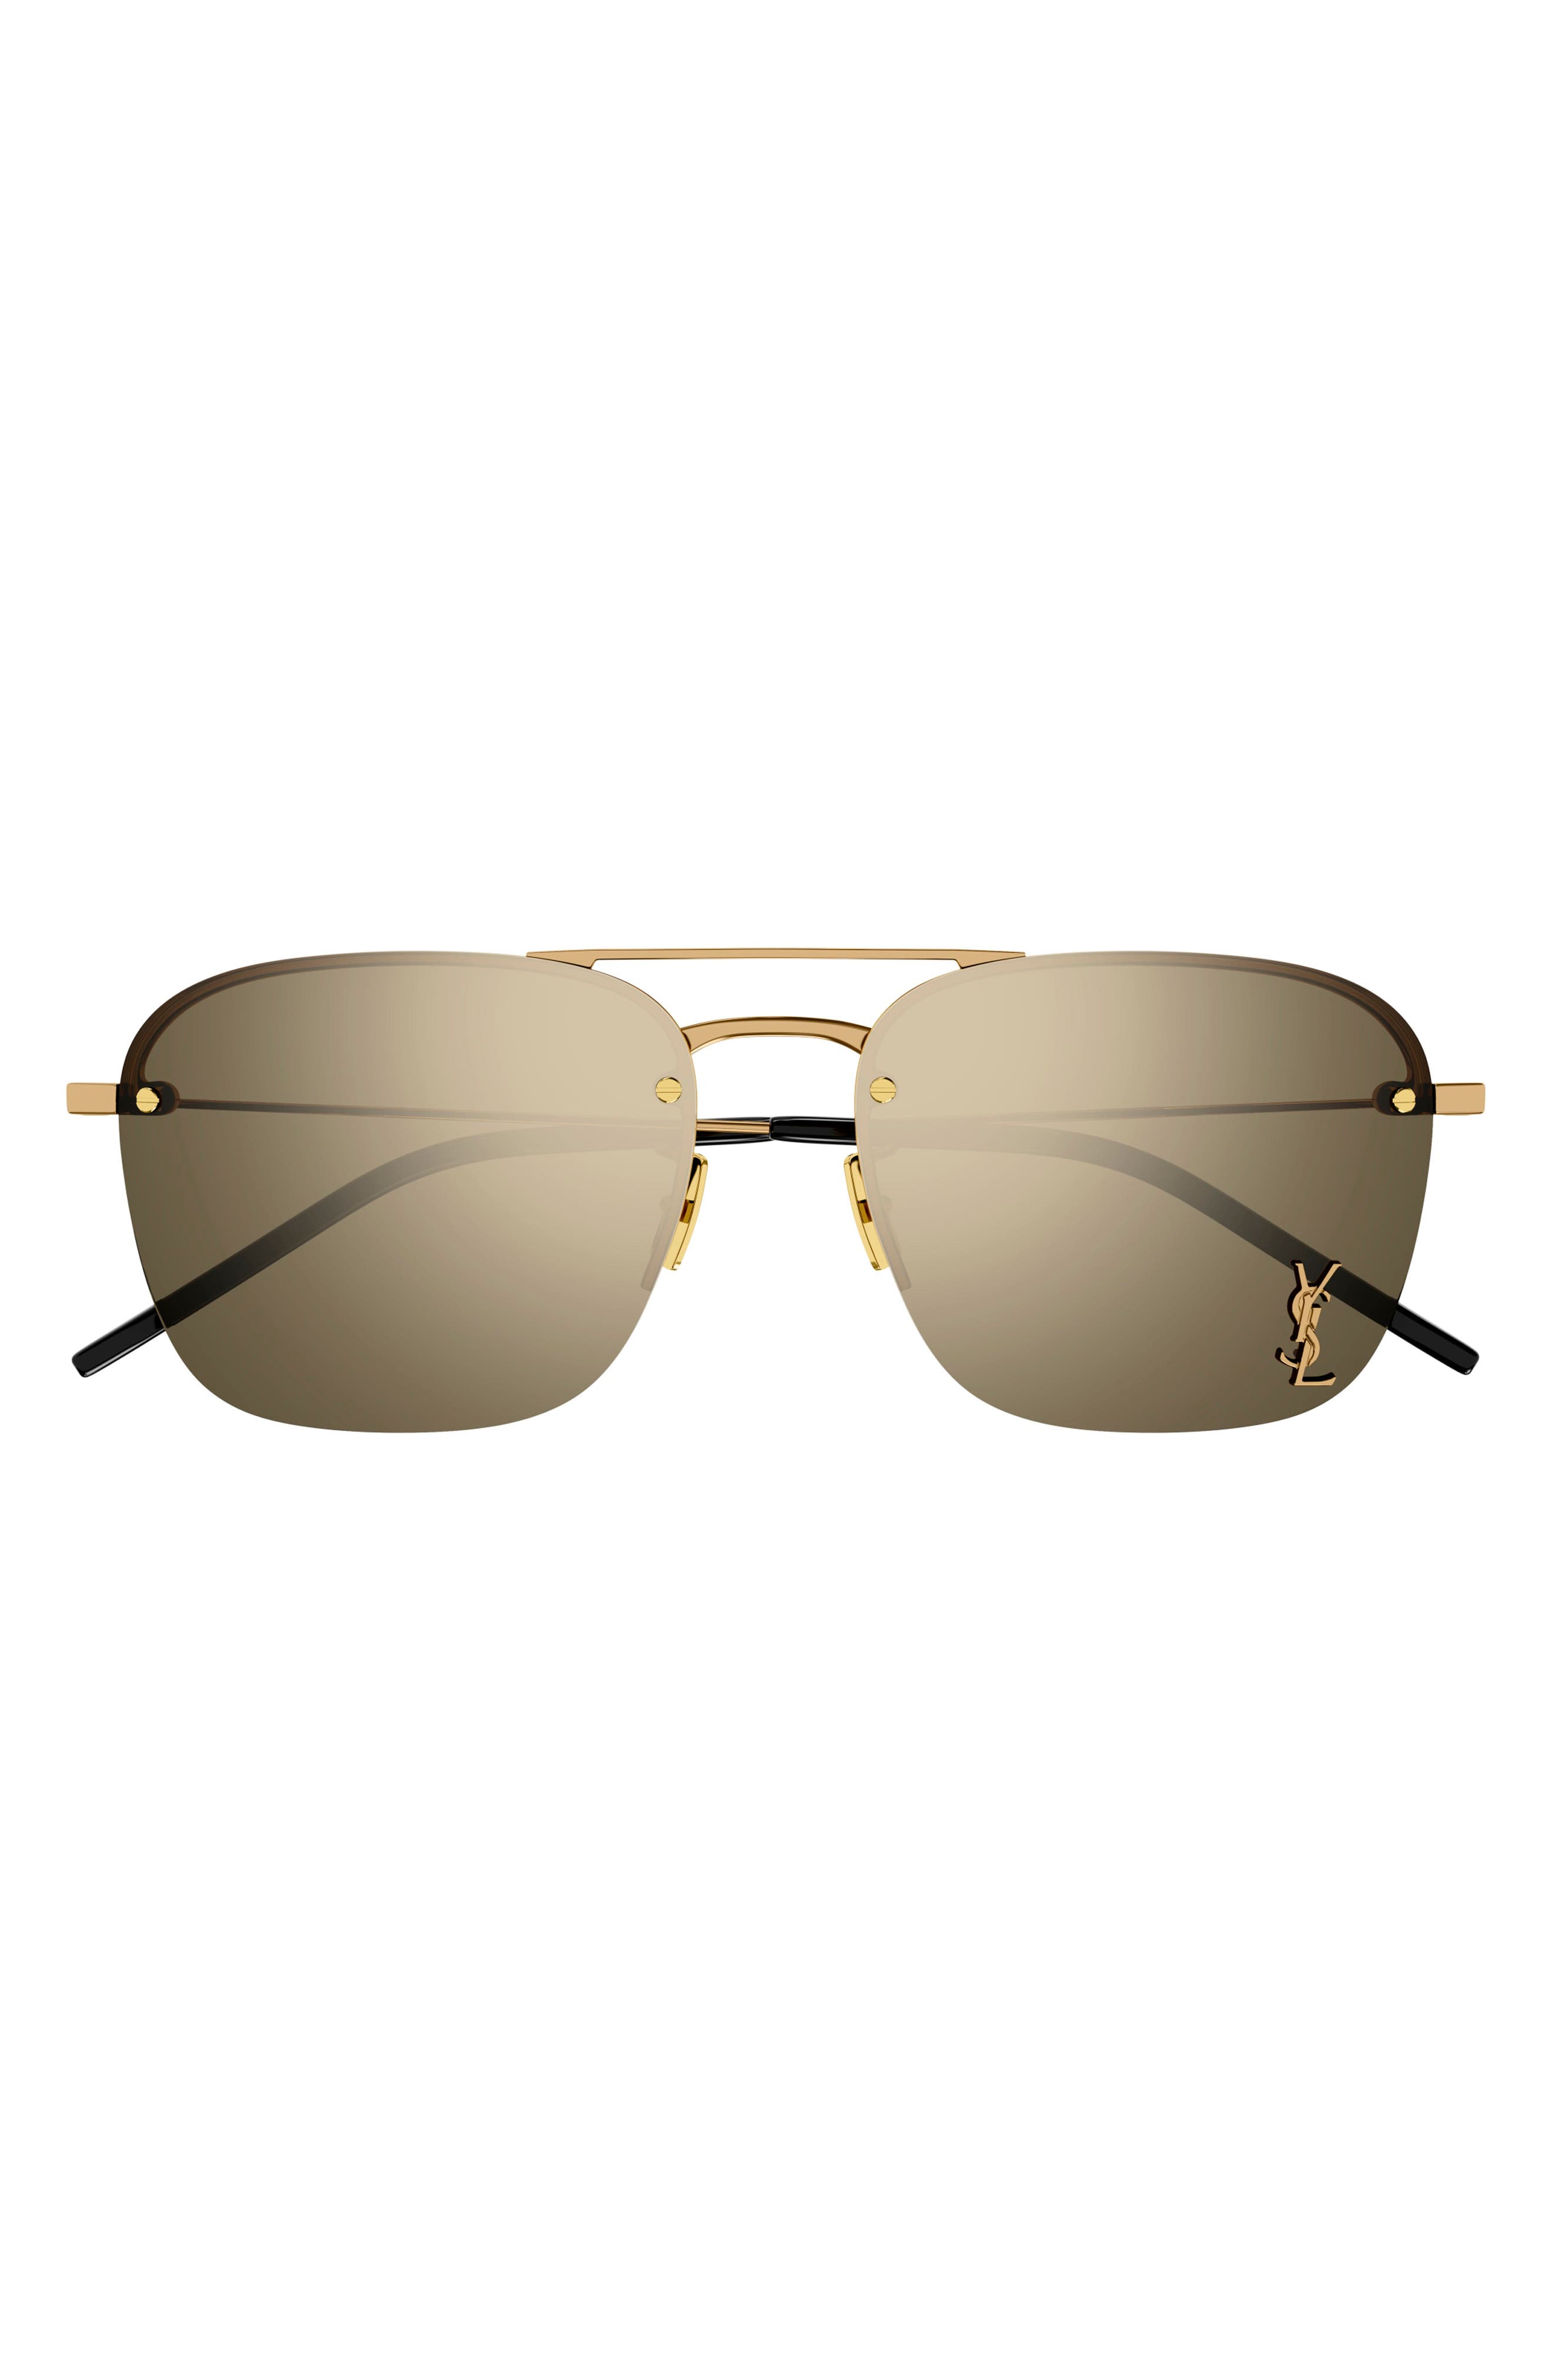 SL 590 Aviator Sunglasses in Brown - Saint Laurent